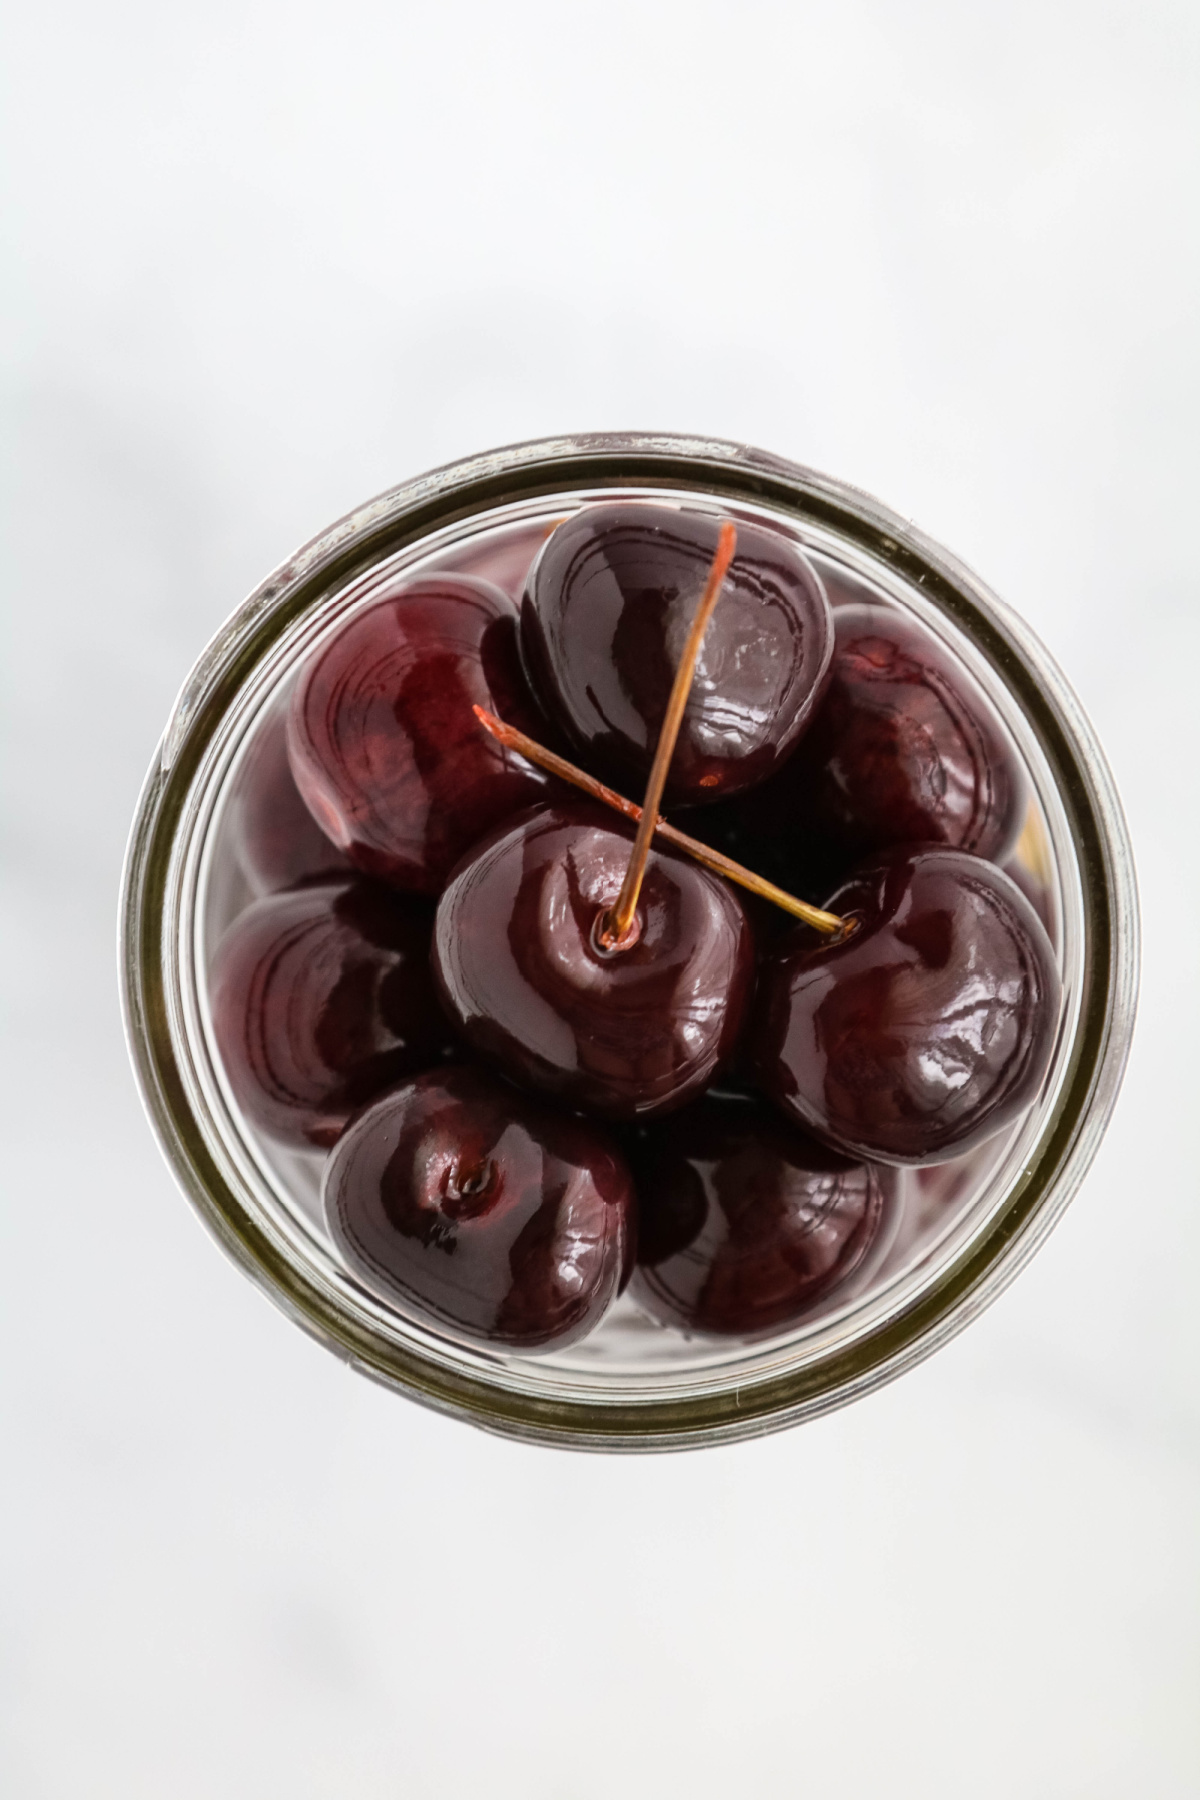 Pickled cherries in glass jar.